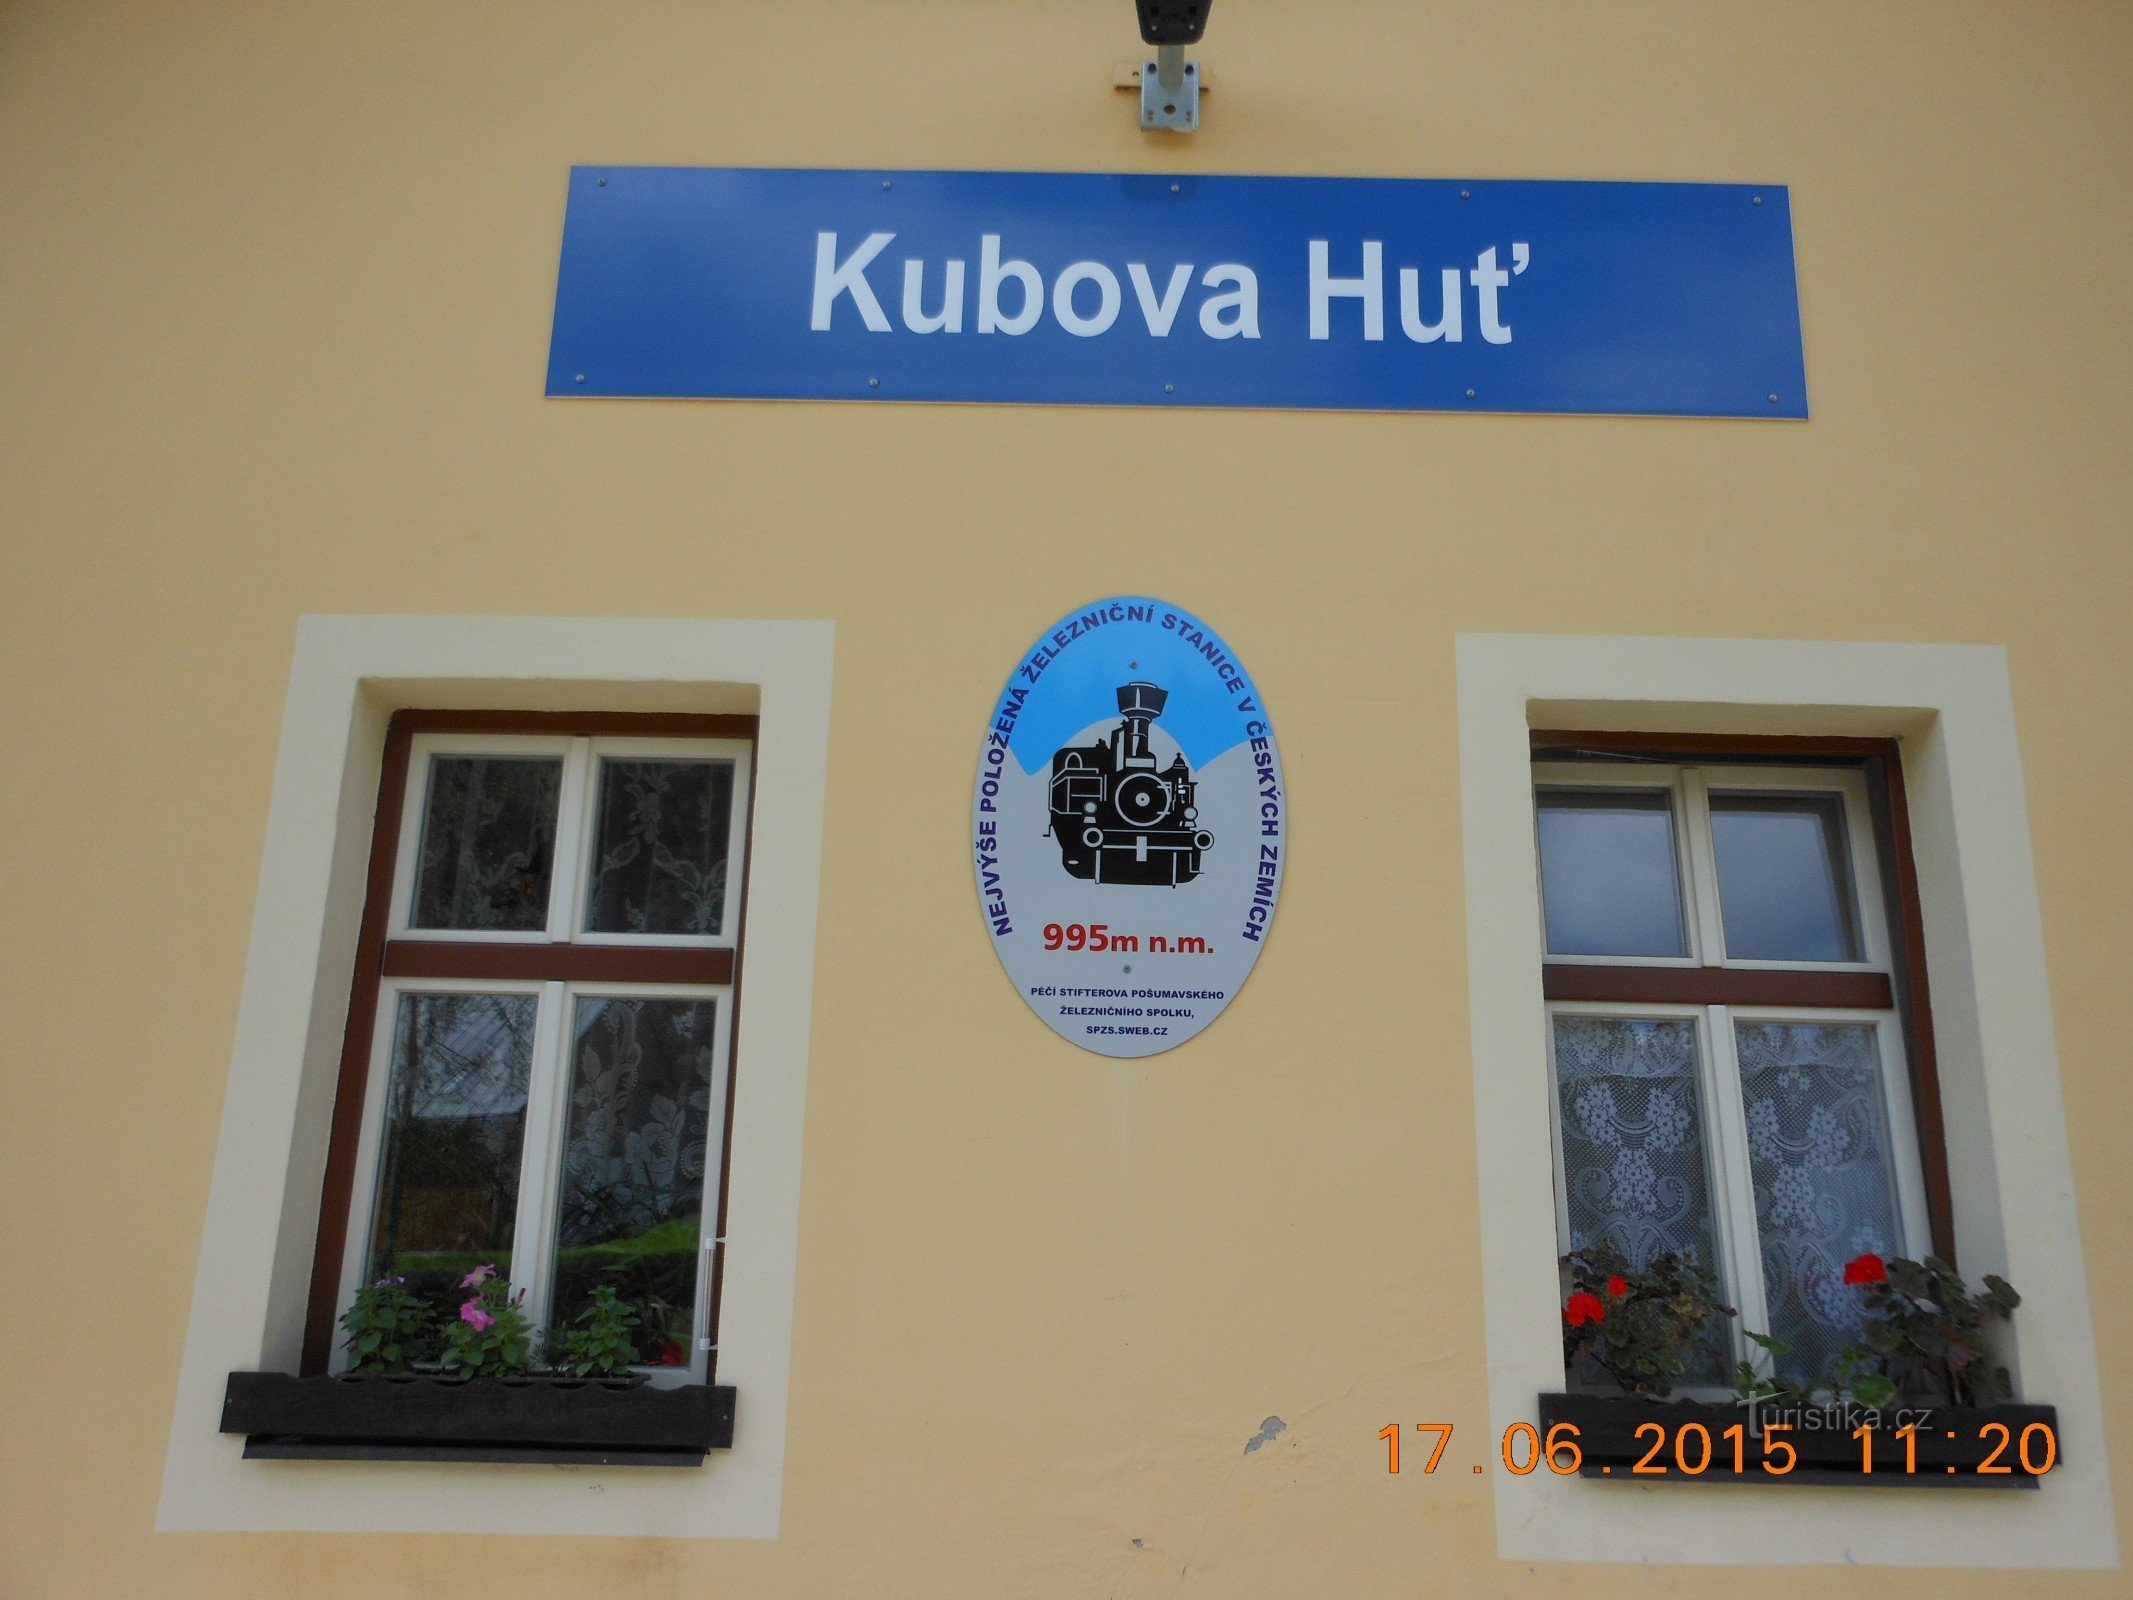 Kubova Huť - ο υψηλότερος σιδηροδρομικός σταθμός στη Βοημία